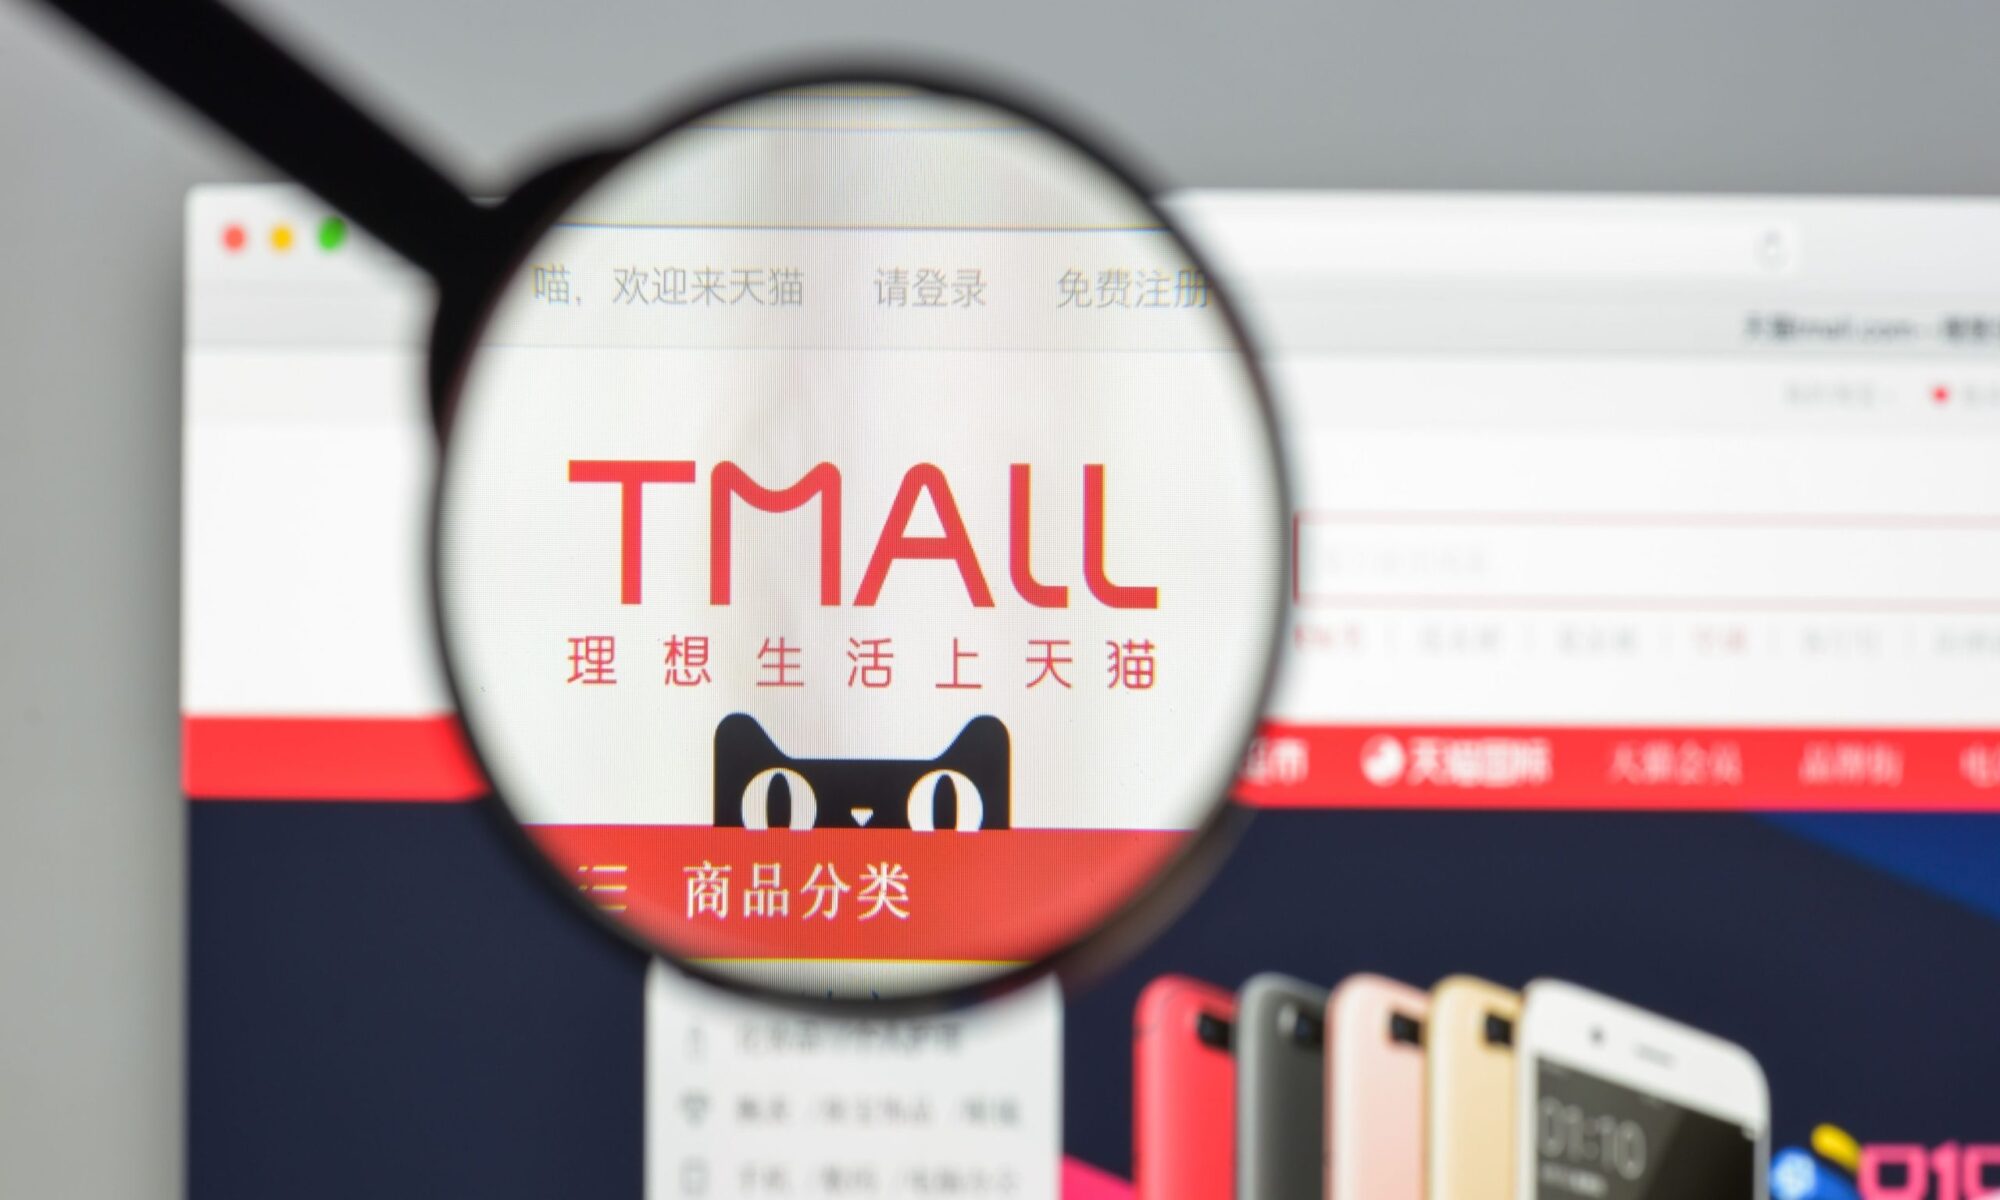 How does Alibaba’s Tmall Innovation Centre help ecommerce merchants?